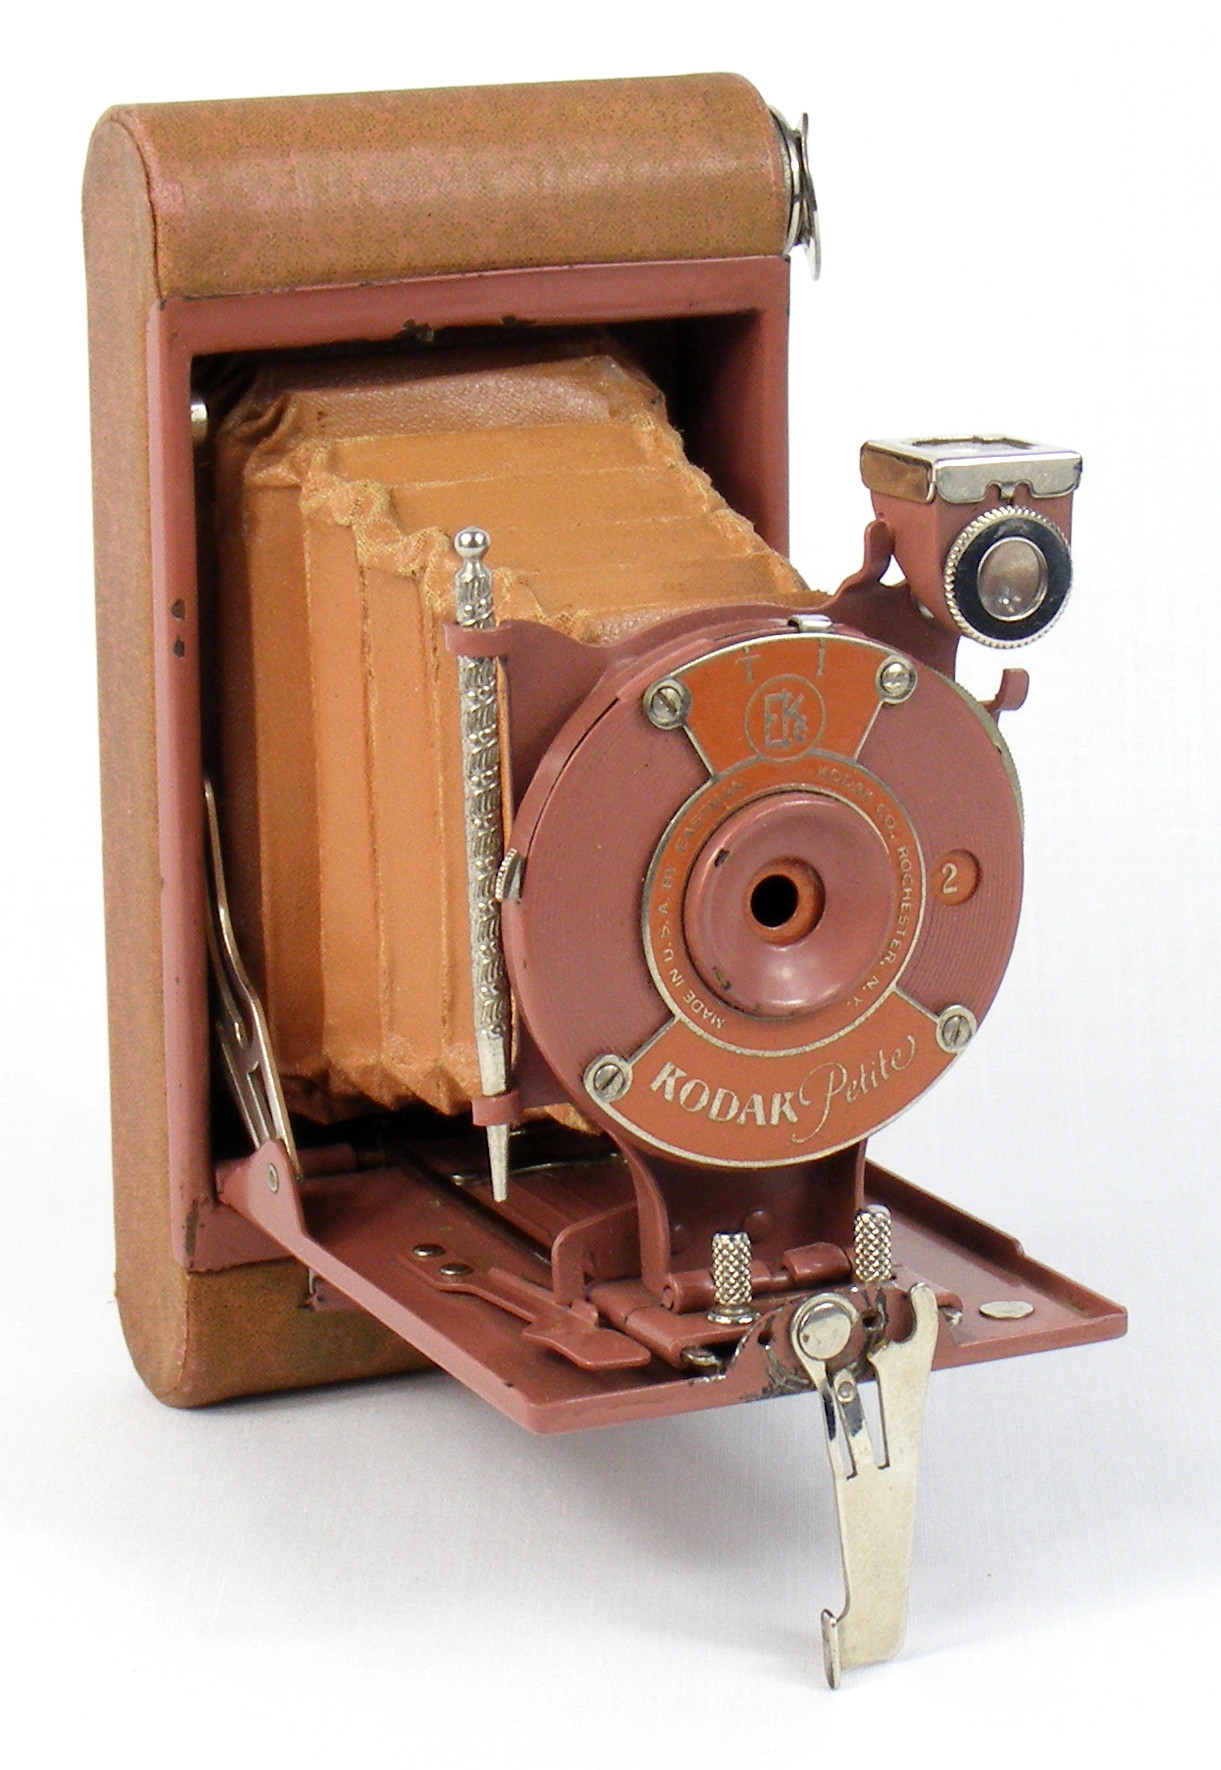 Image of Kodak Petite folding camera (Old Rose)